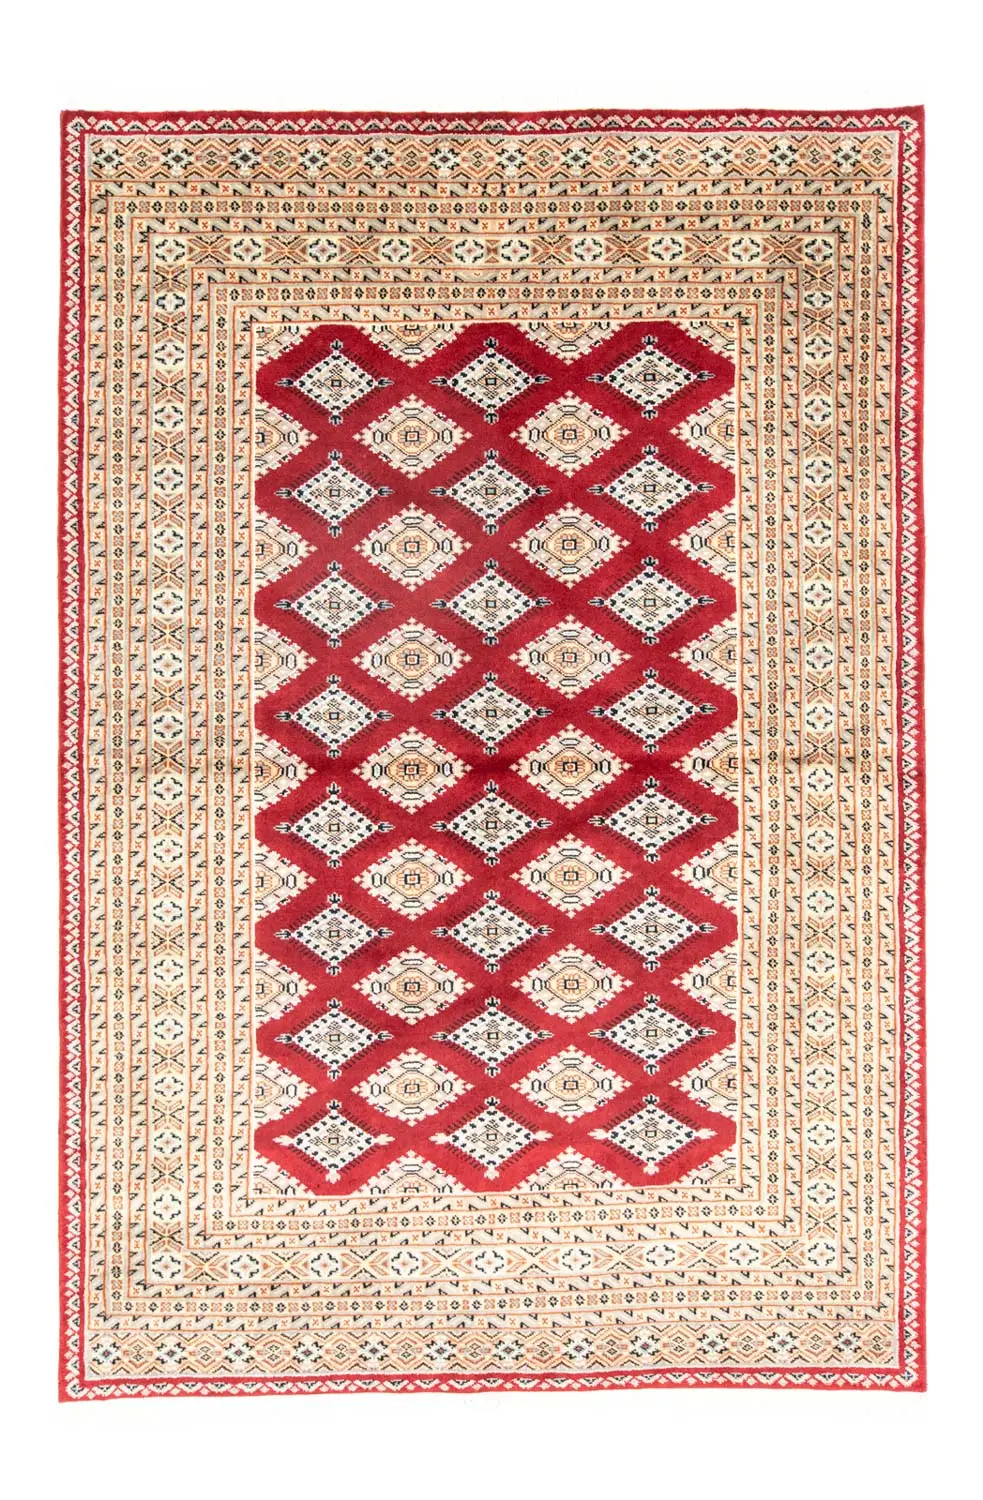 Pakistan Teppich - 207 x 143 cm - rot